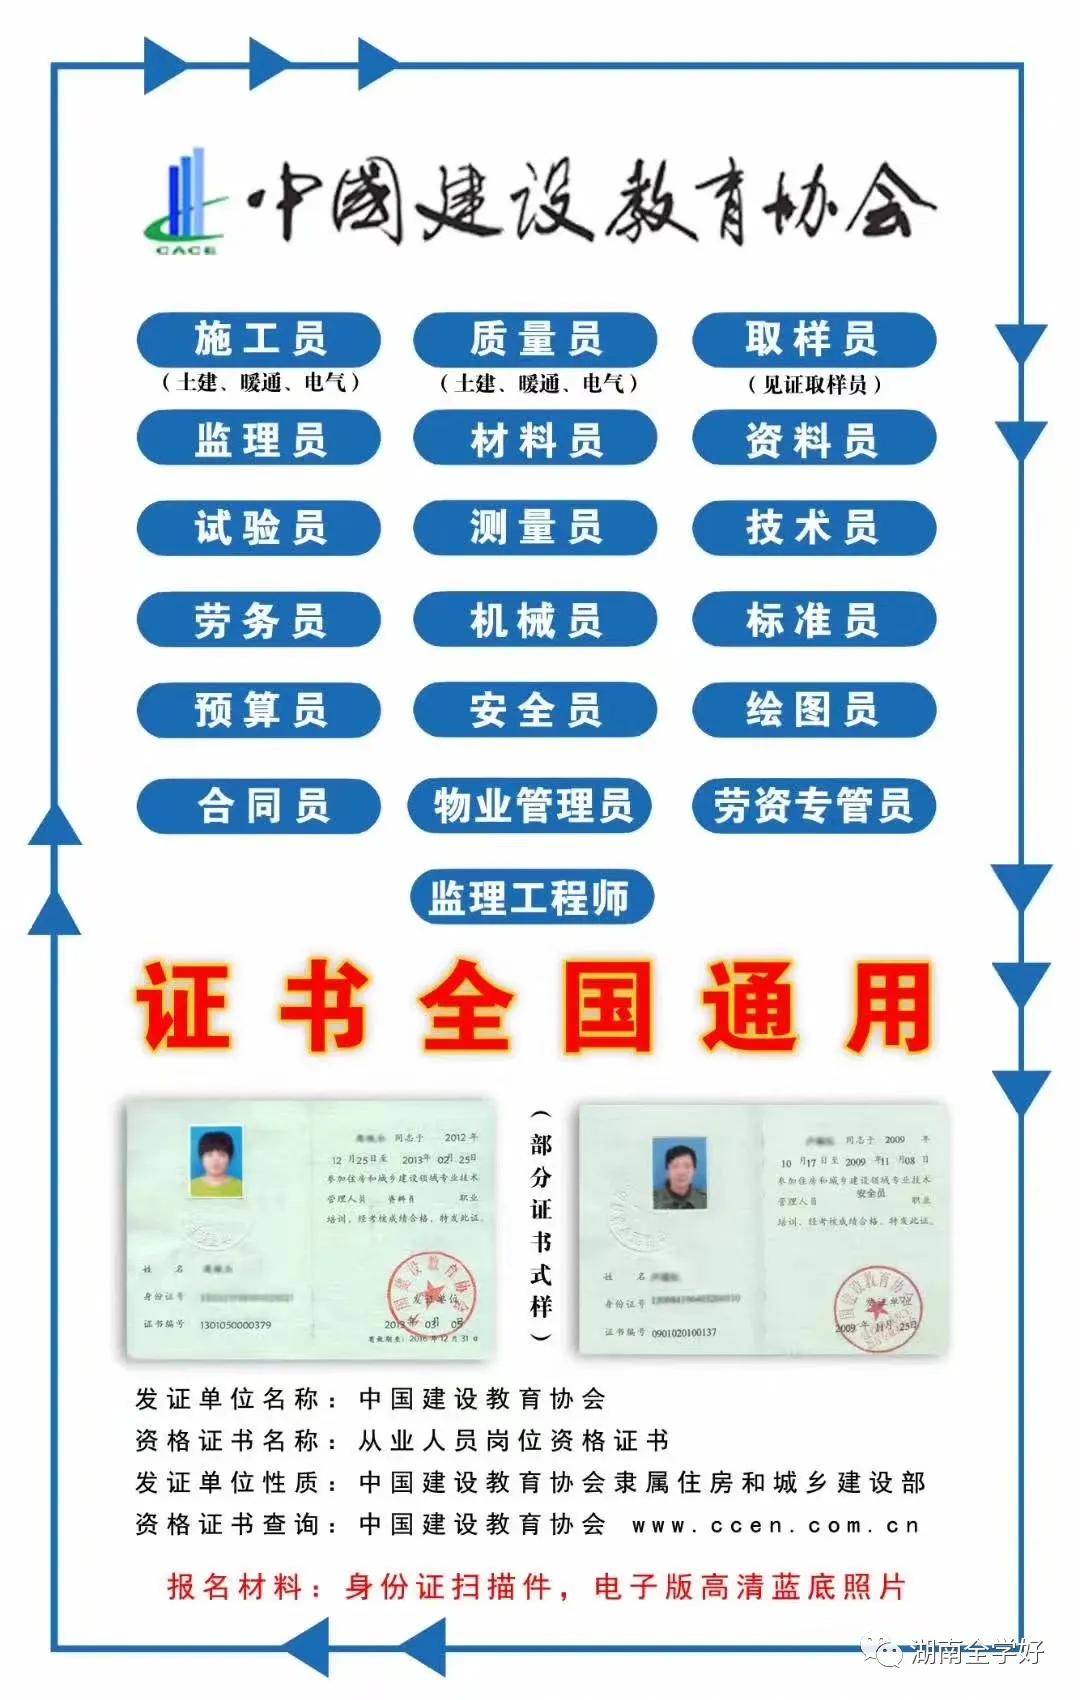 ccencomcn/中国建设教育协会发的相关岗位证书就